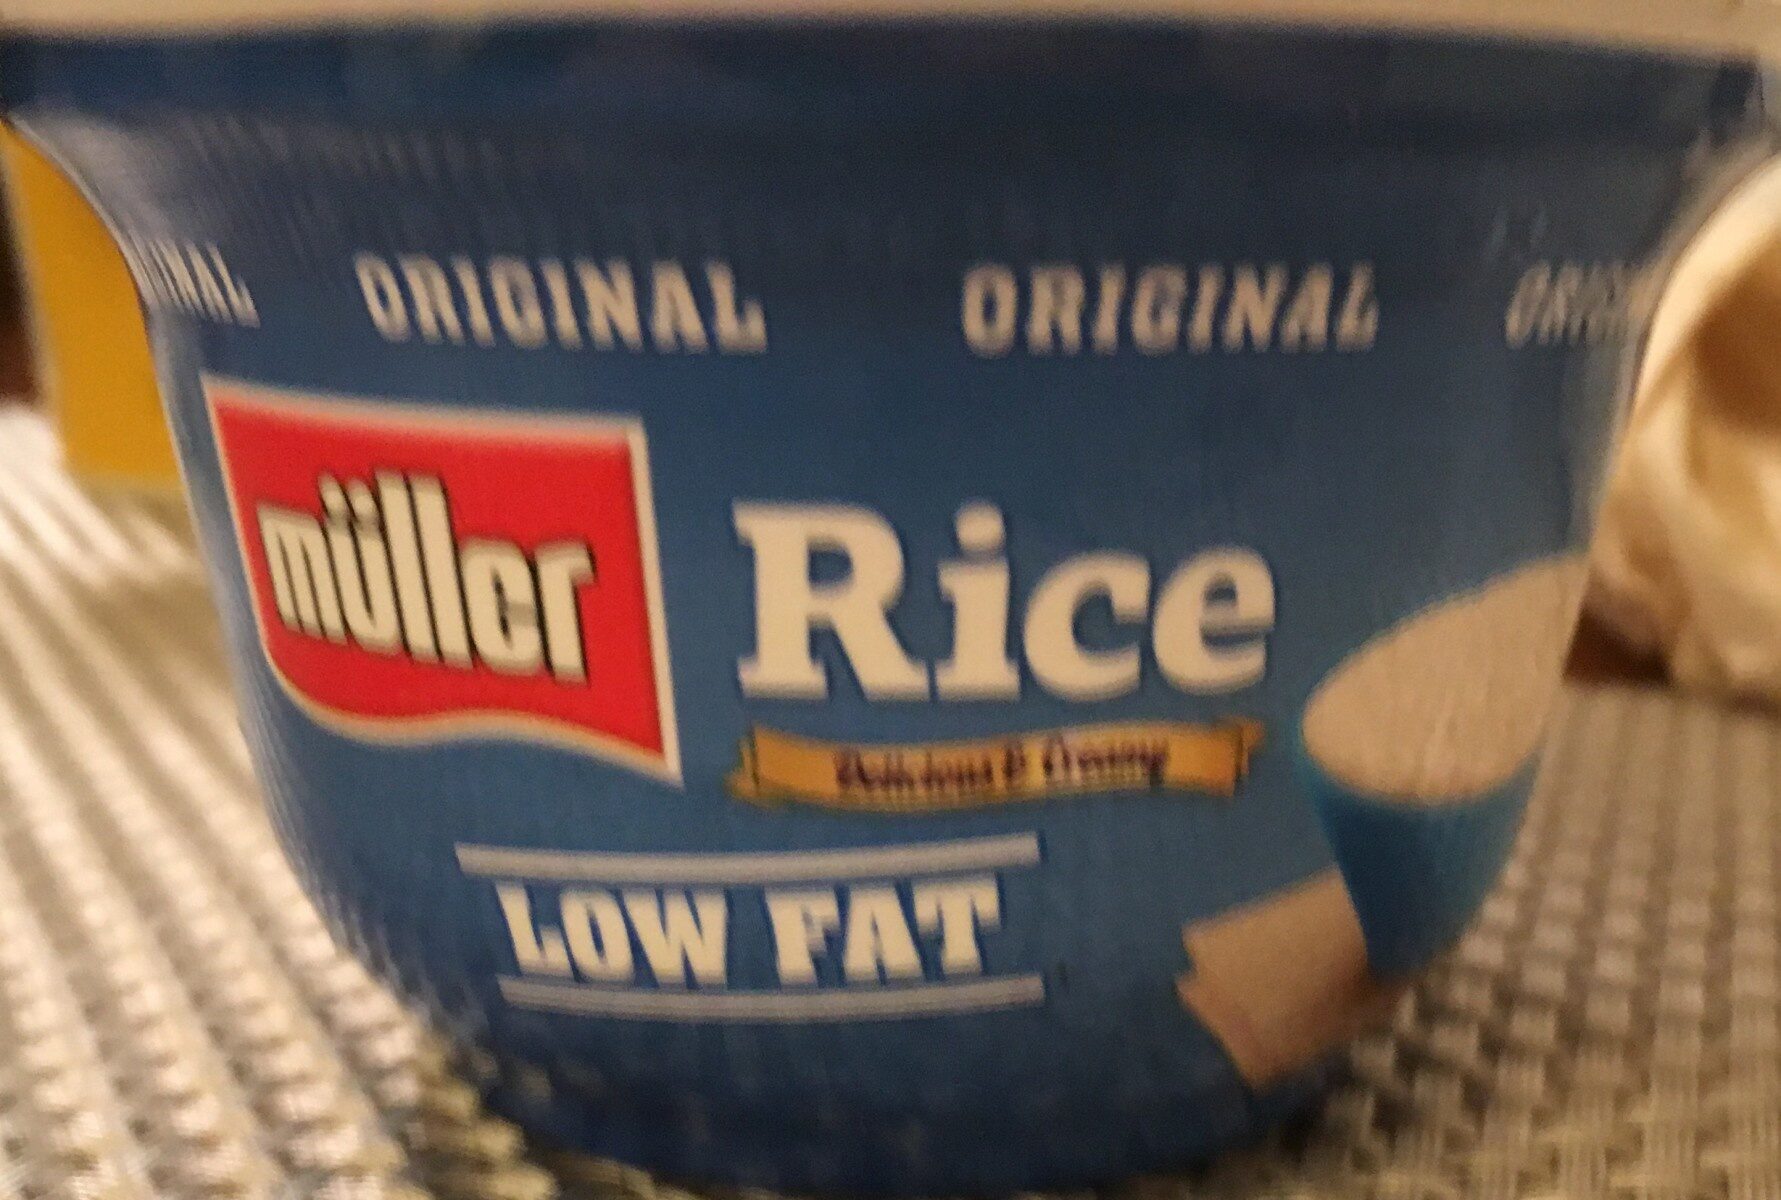 Muller Rice Original Low Fat Dessert - Produkt - en